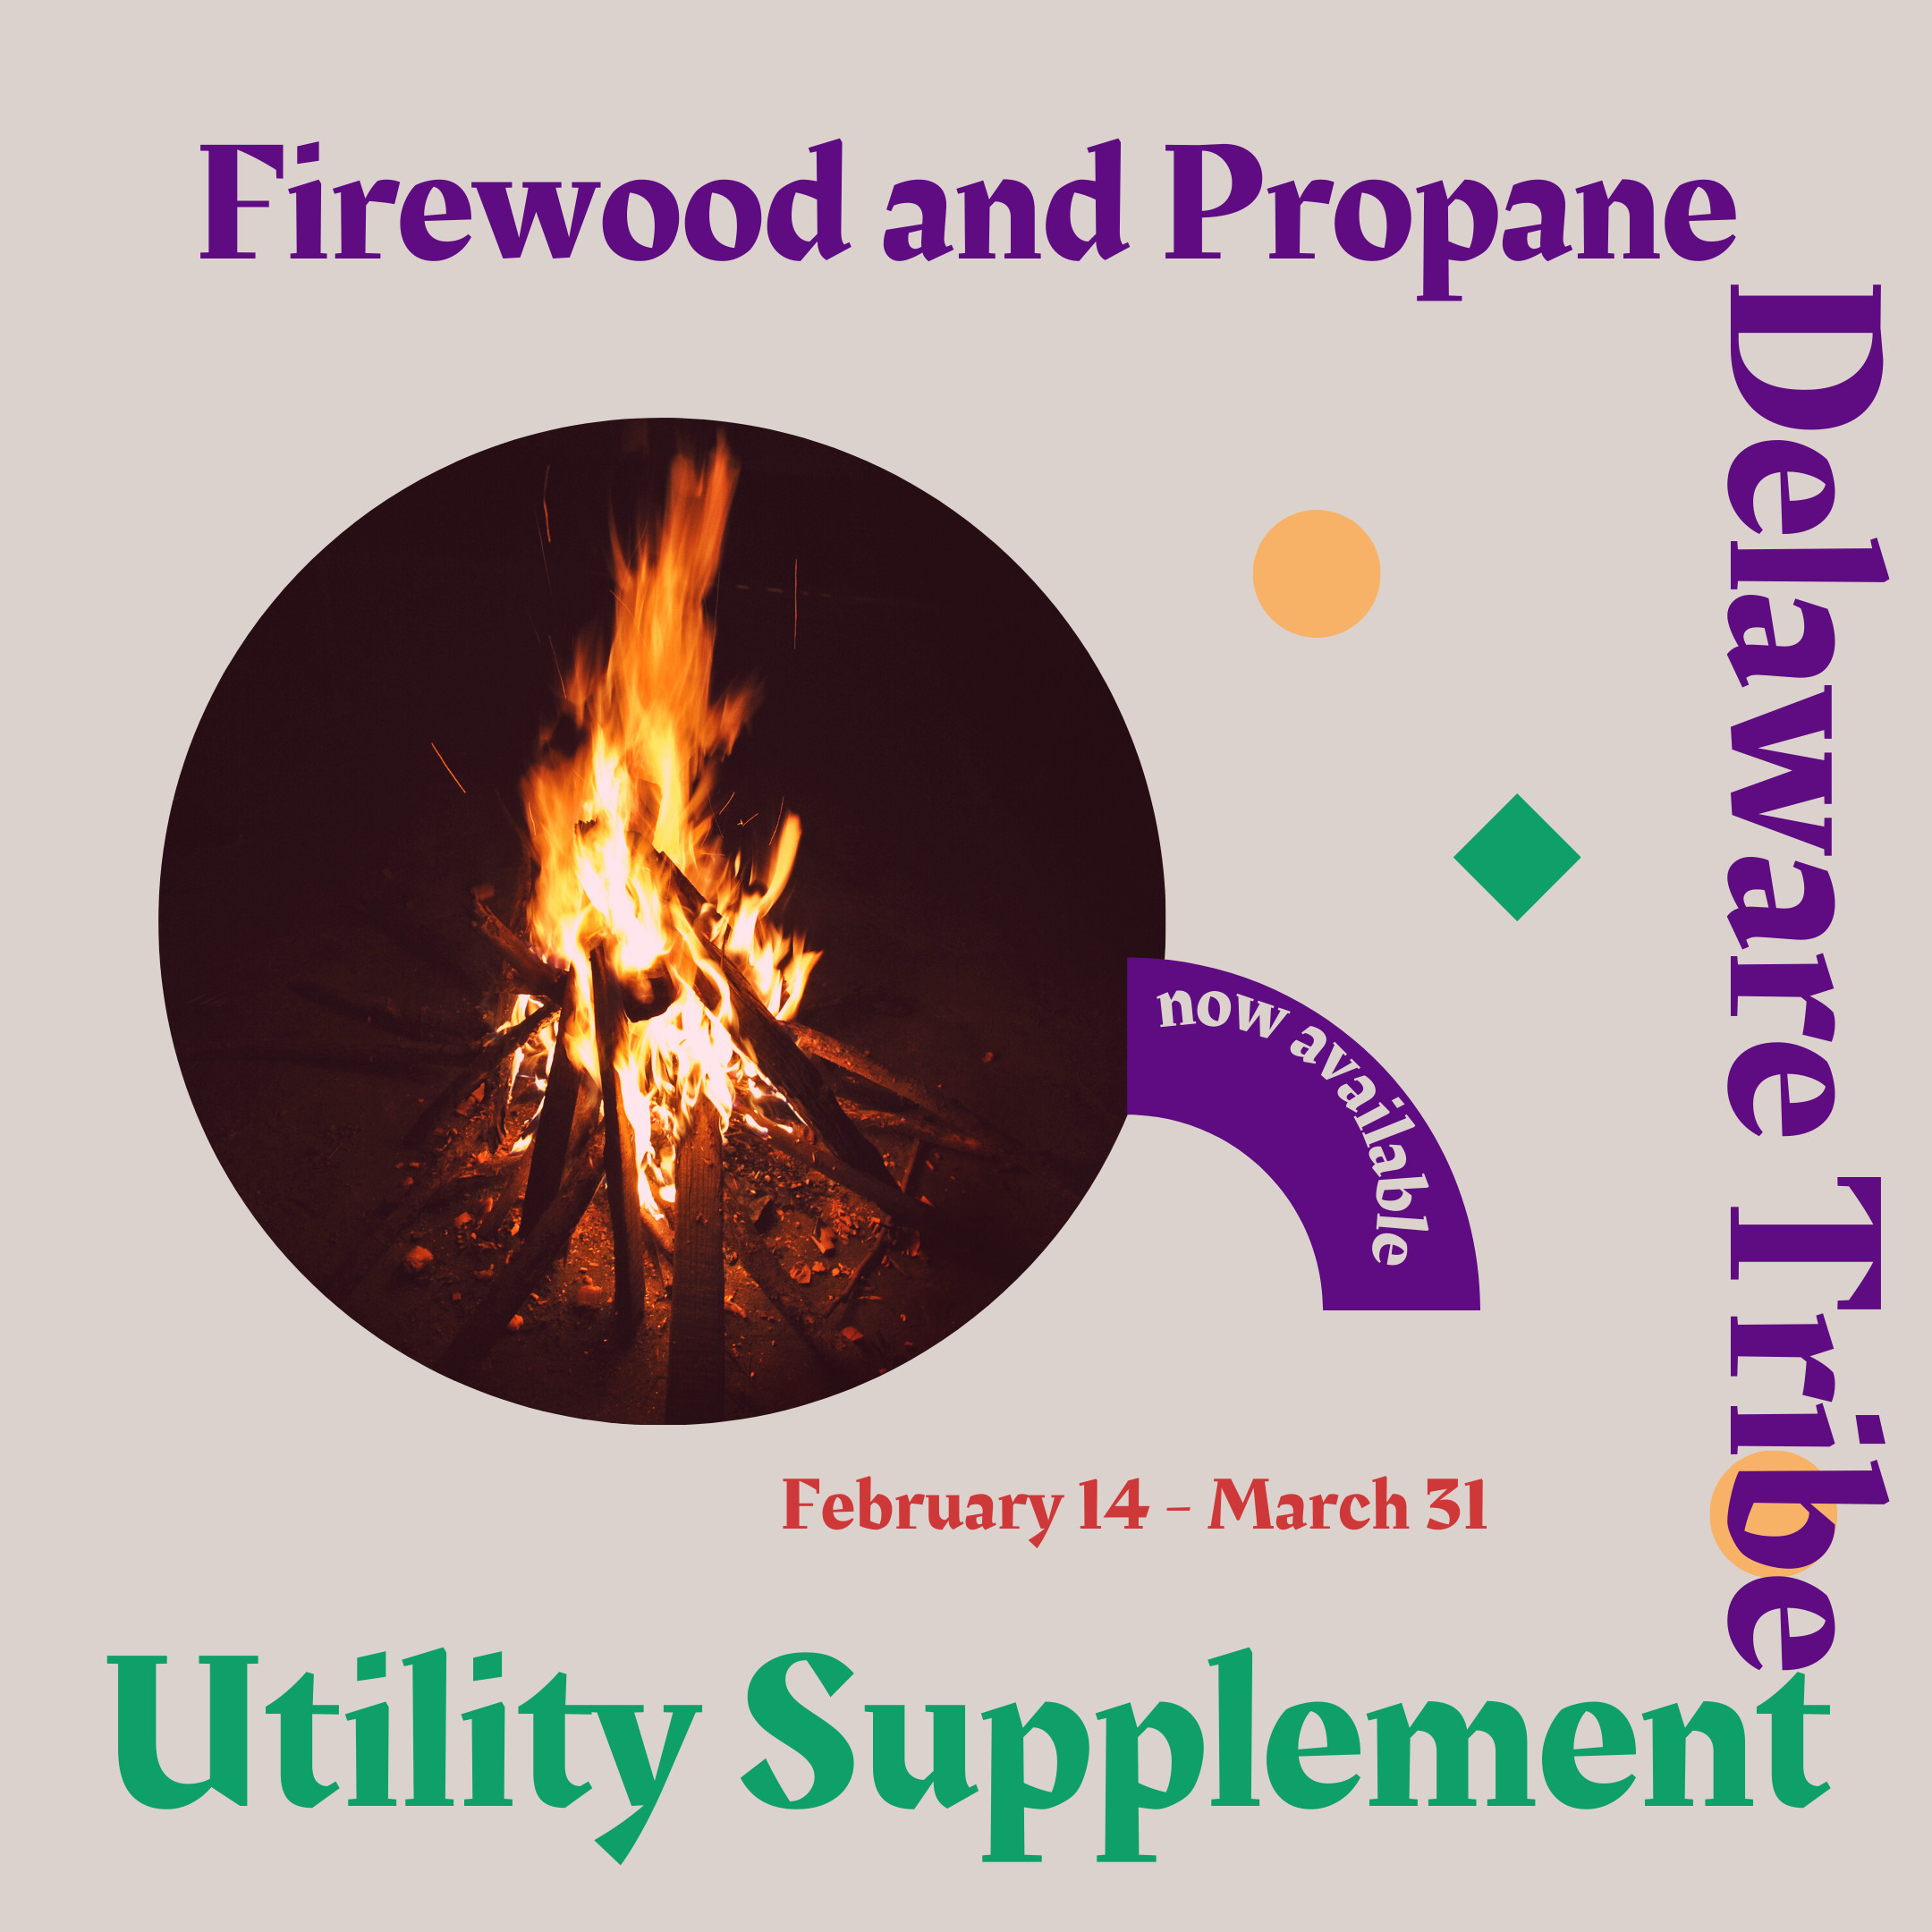 Apply for Utility Supplement Program Running February 14 - March 31, 2022